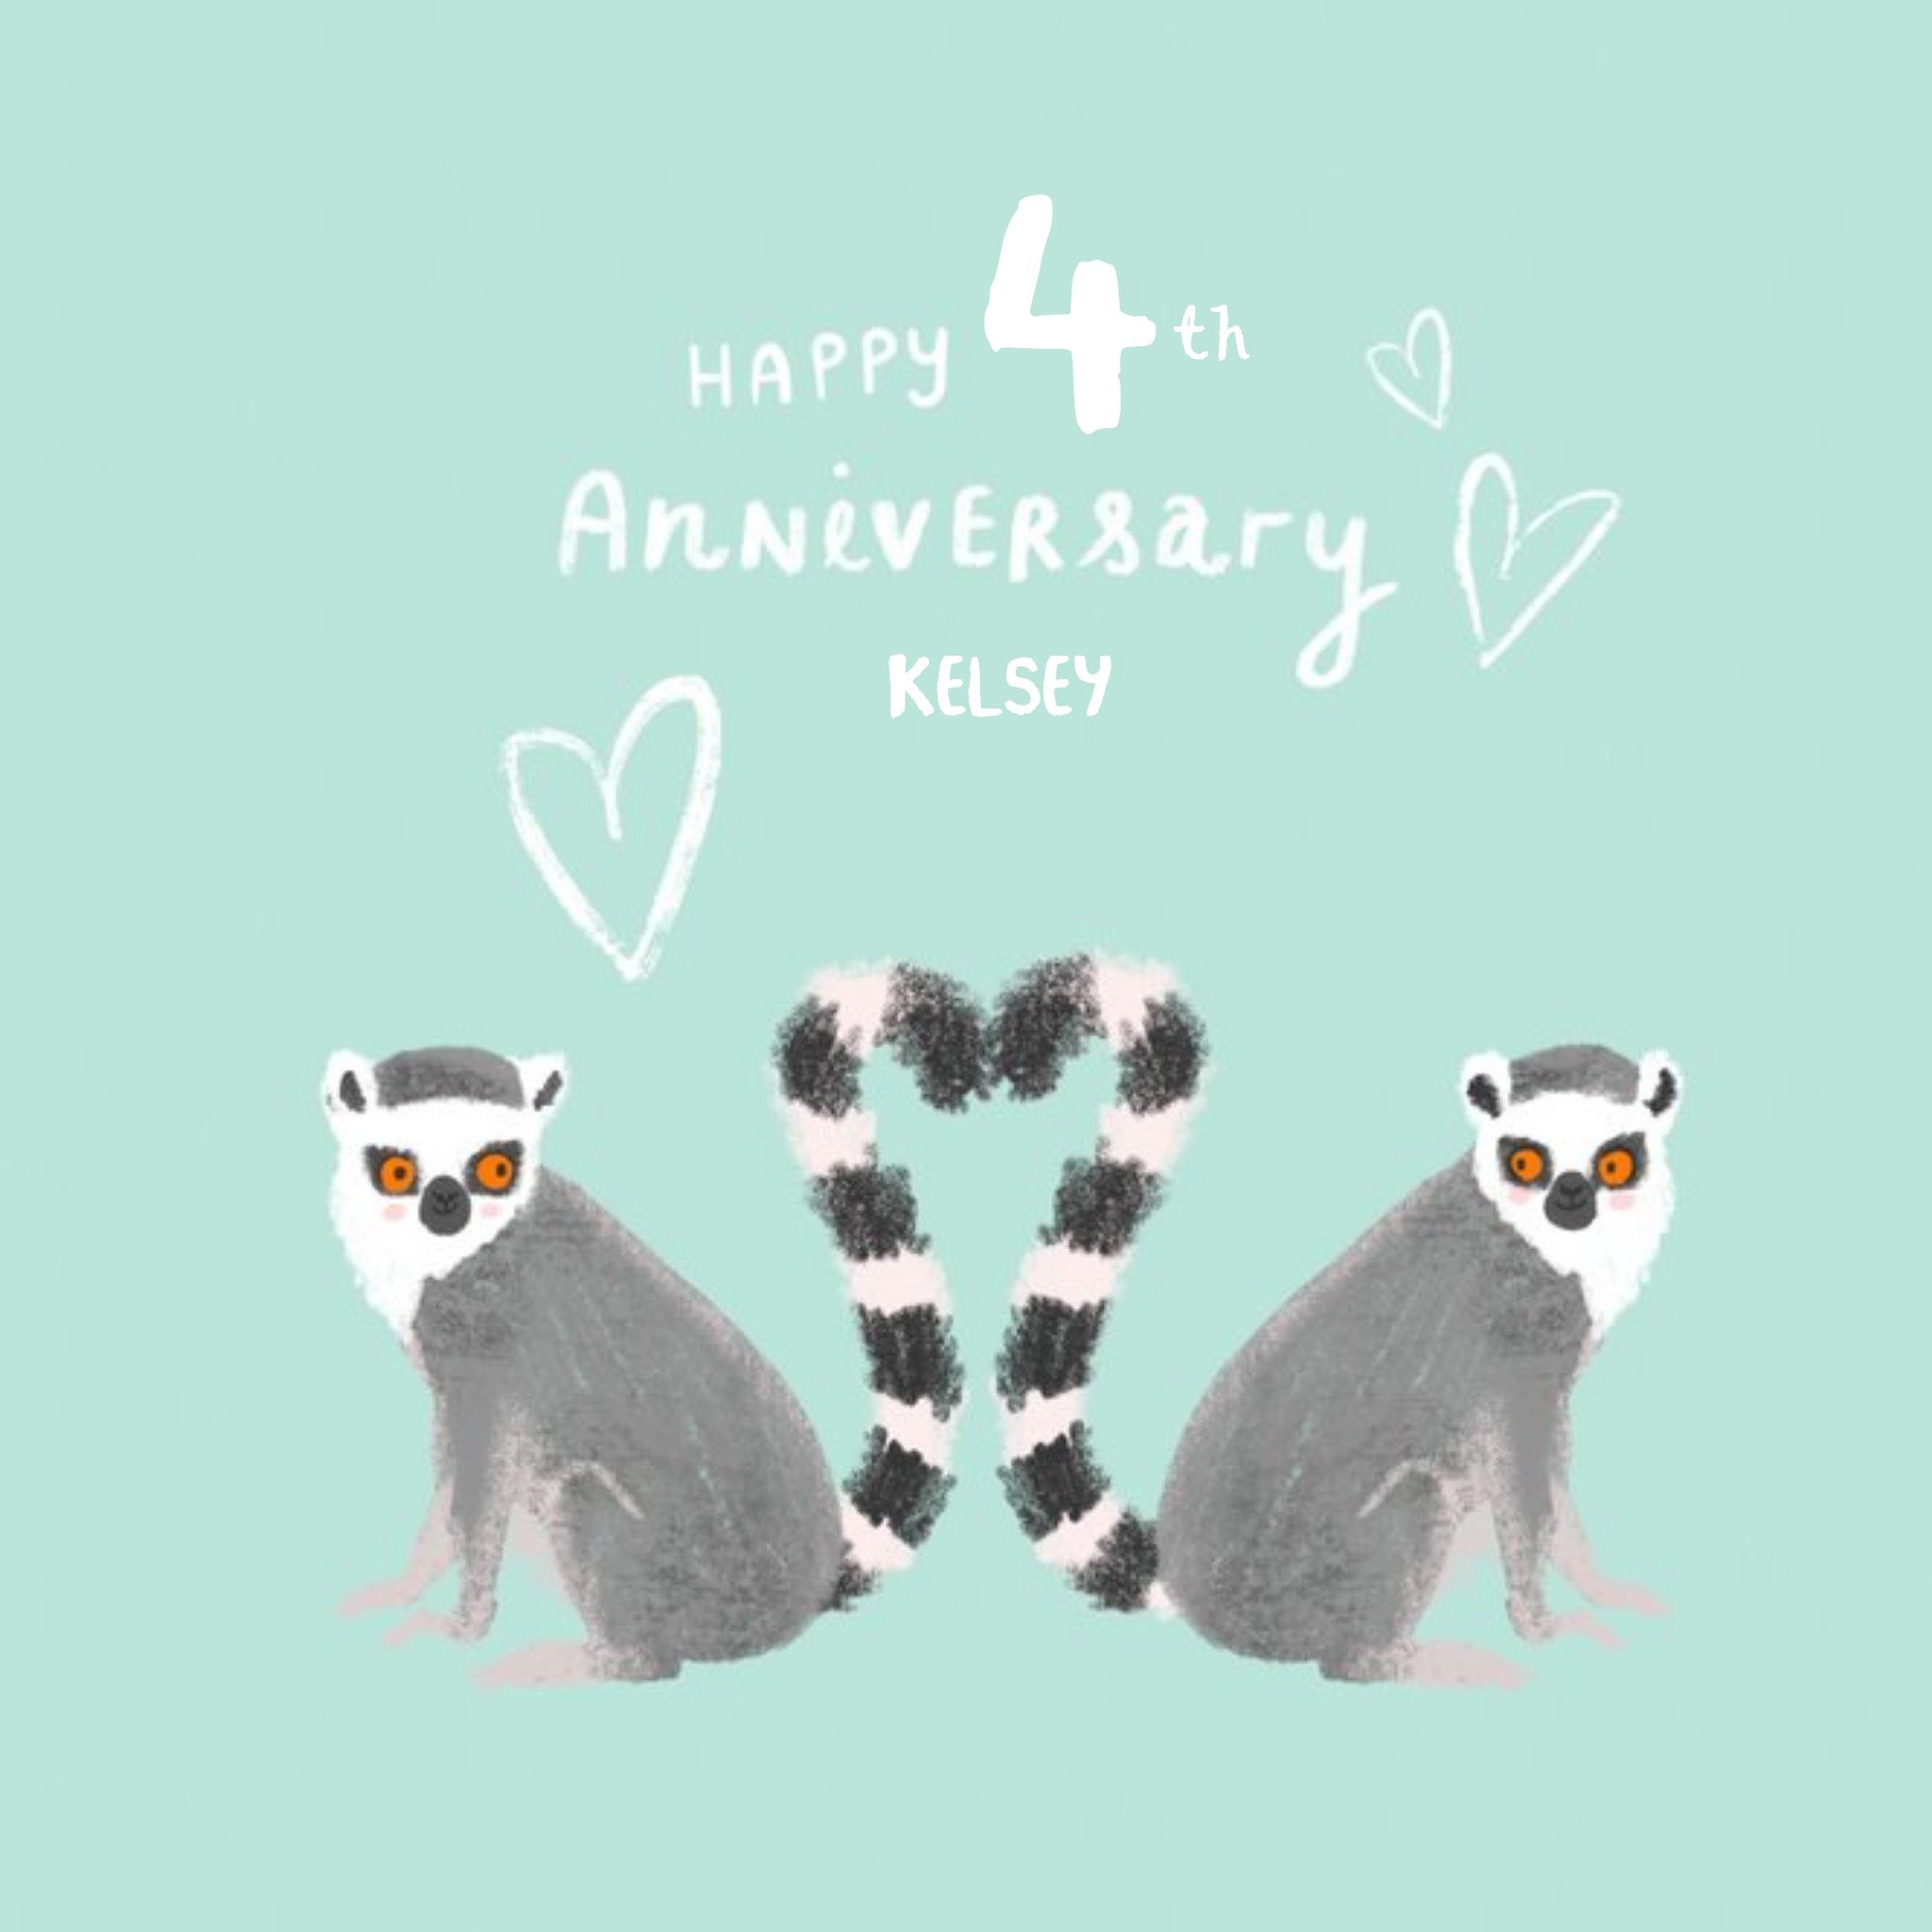 Love Hearts Millicent Venton Illustrated Lemurs 4th Anniversary Card, Square